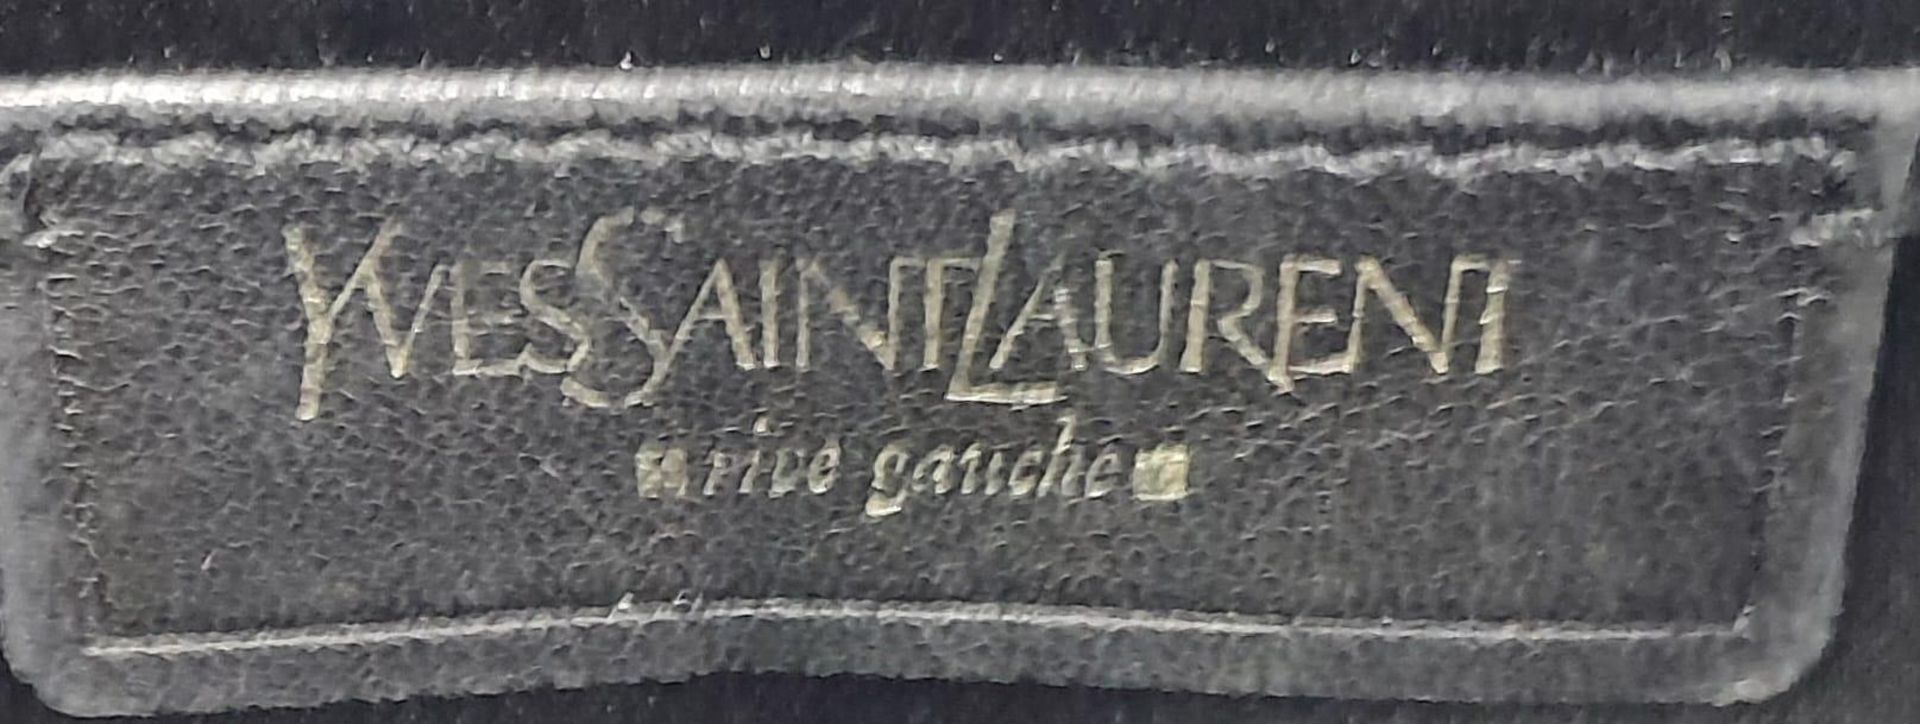 An Yves Saint Laurent Black Shoulder Bag. Leather exterior with patent leather details, gold-toned - Bild 6 aus 7